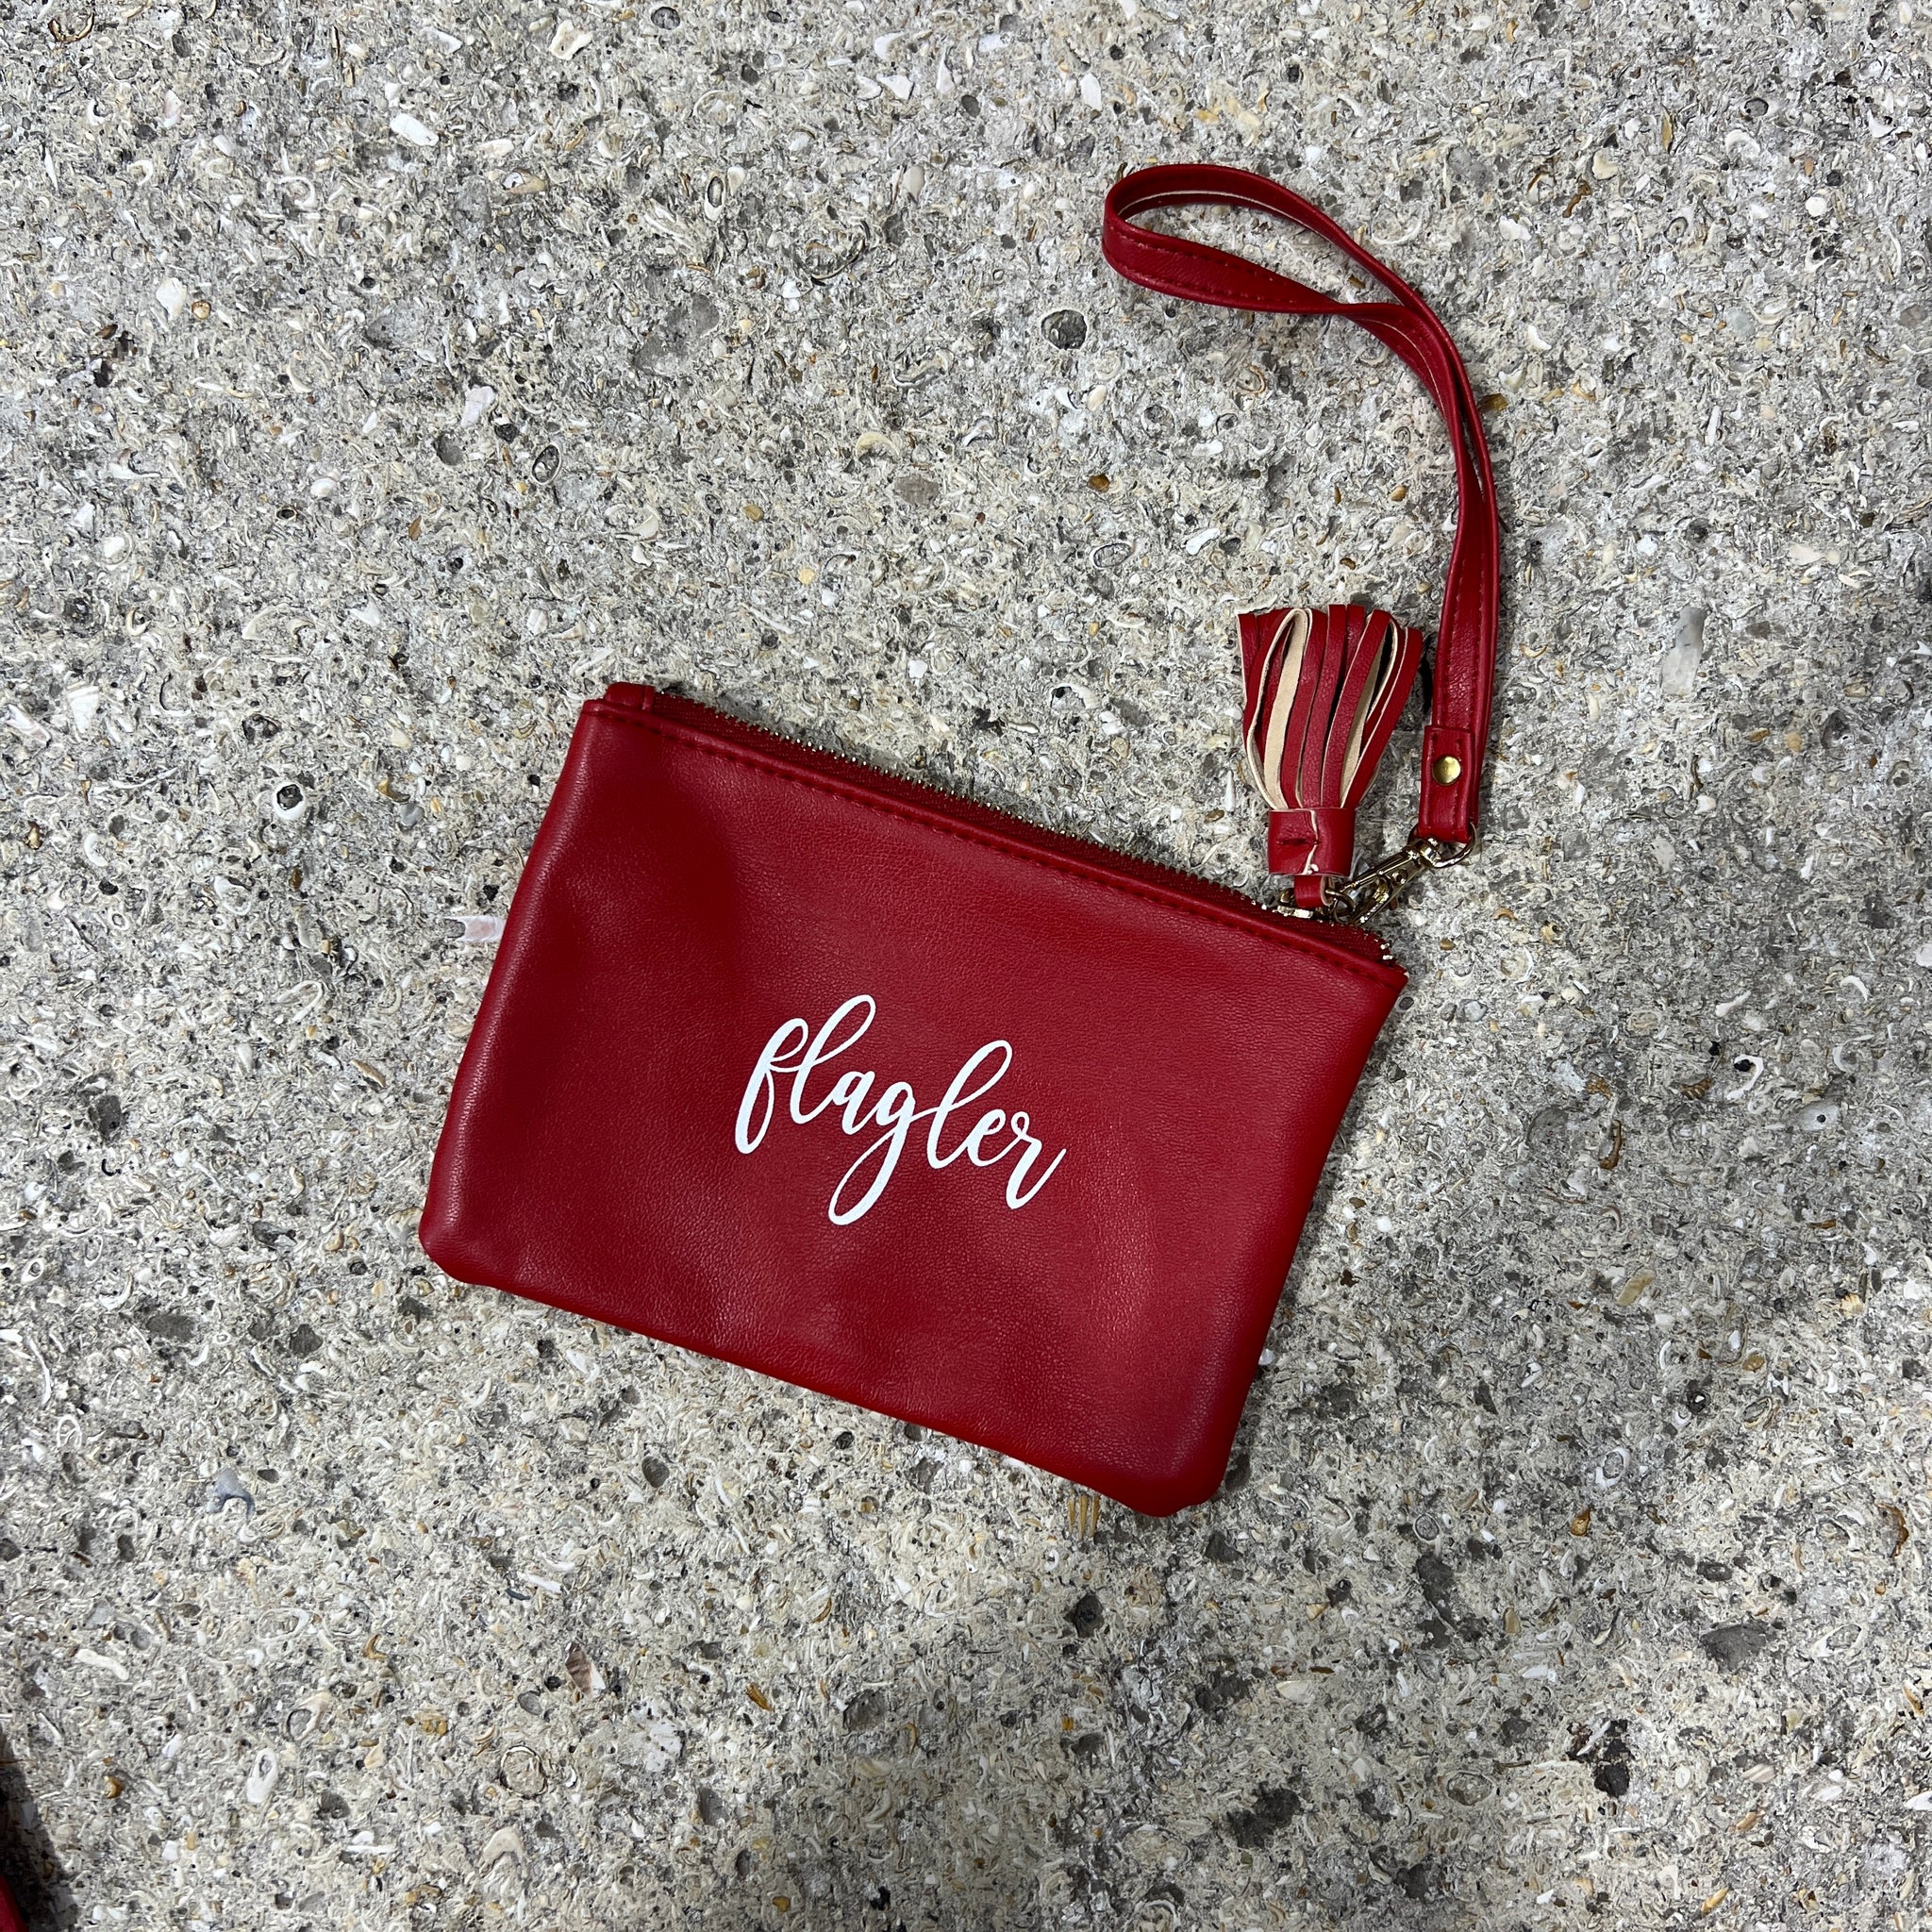 Crimson wristlet bag with white cursive imprint saying Flagler